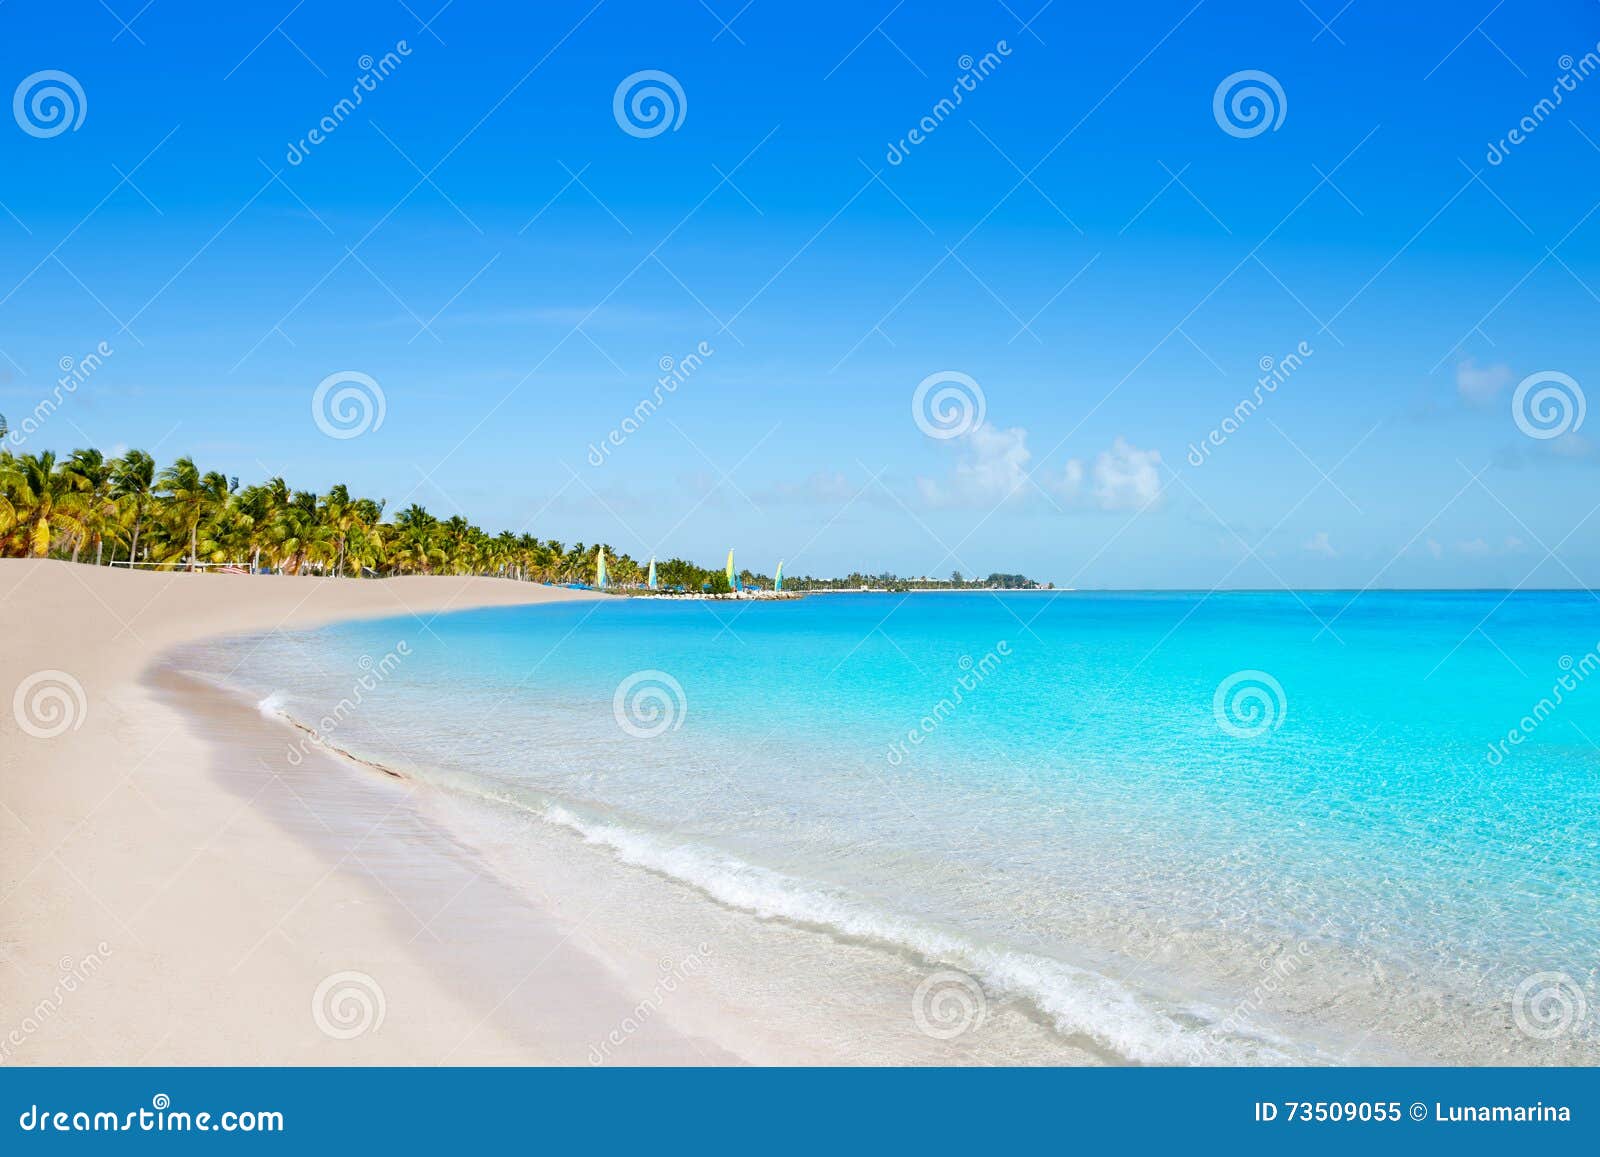 key west florida smathers beach palm trees us